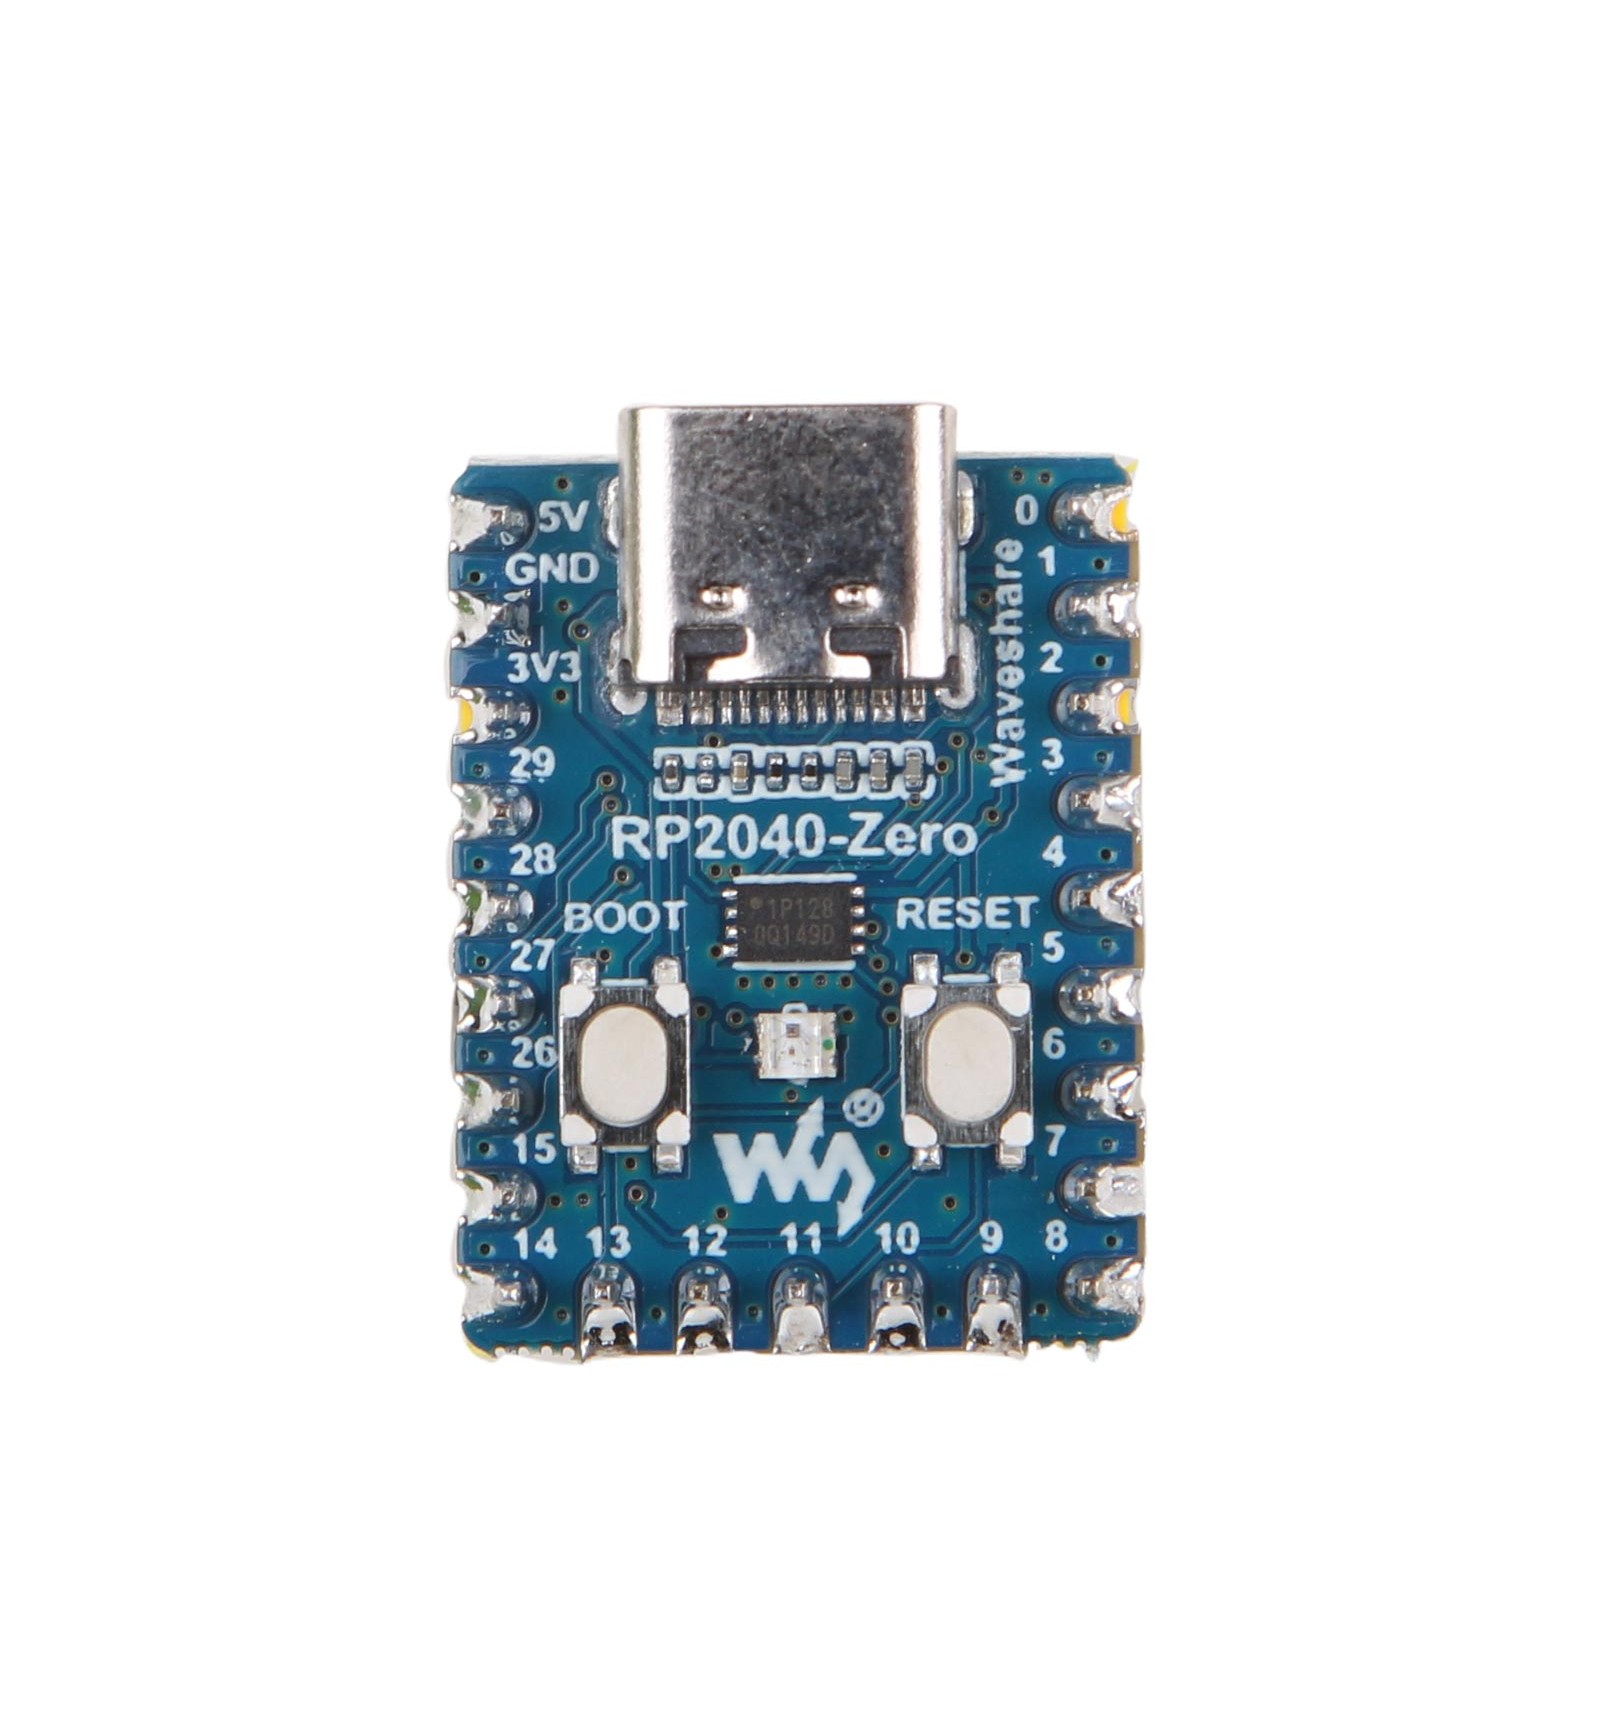 RP2040-Zero Pico-Like MCU Board Based On Raspberry Pi Microcontroller RP2040  NEW